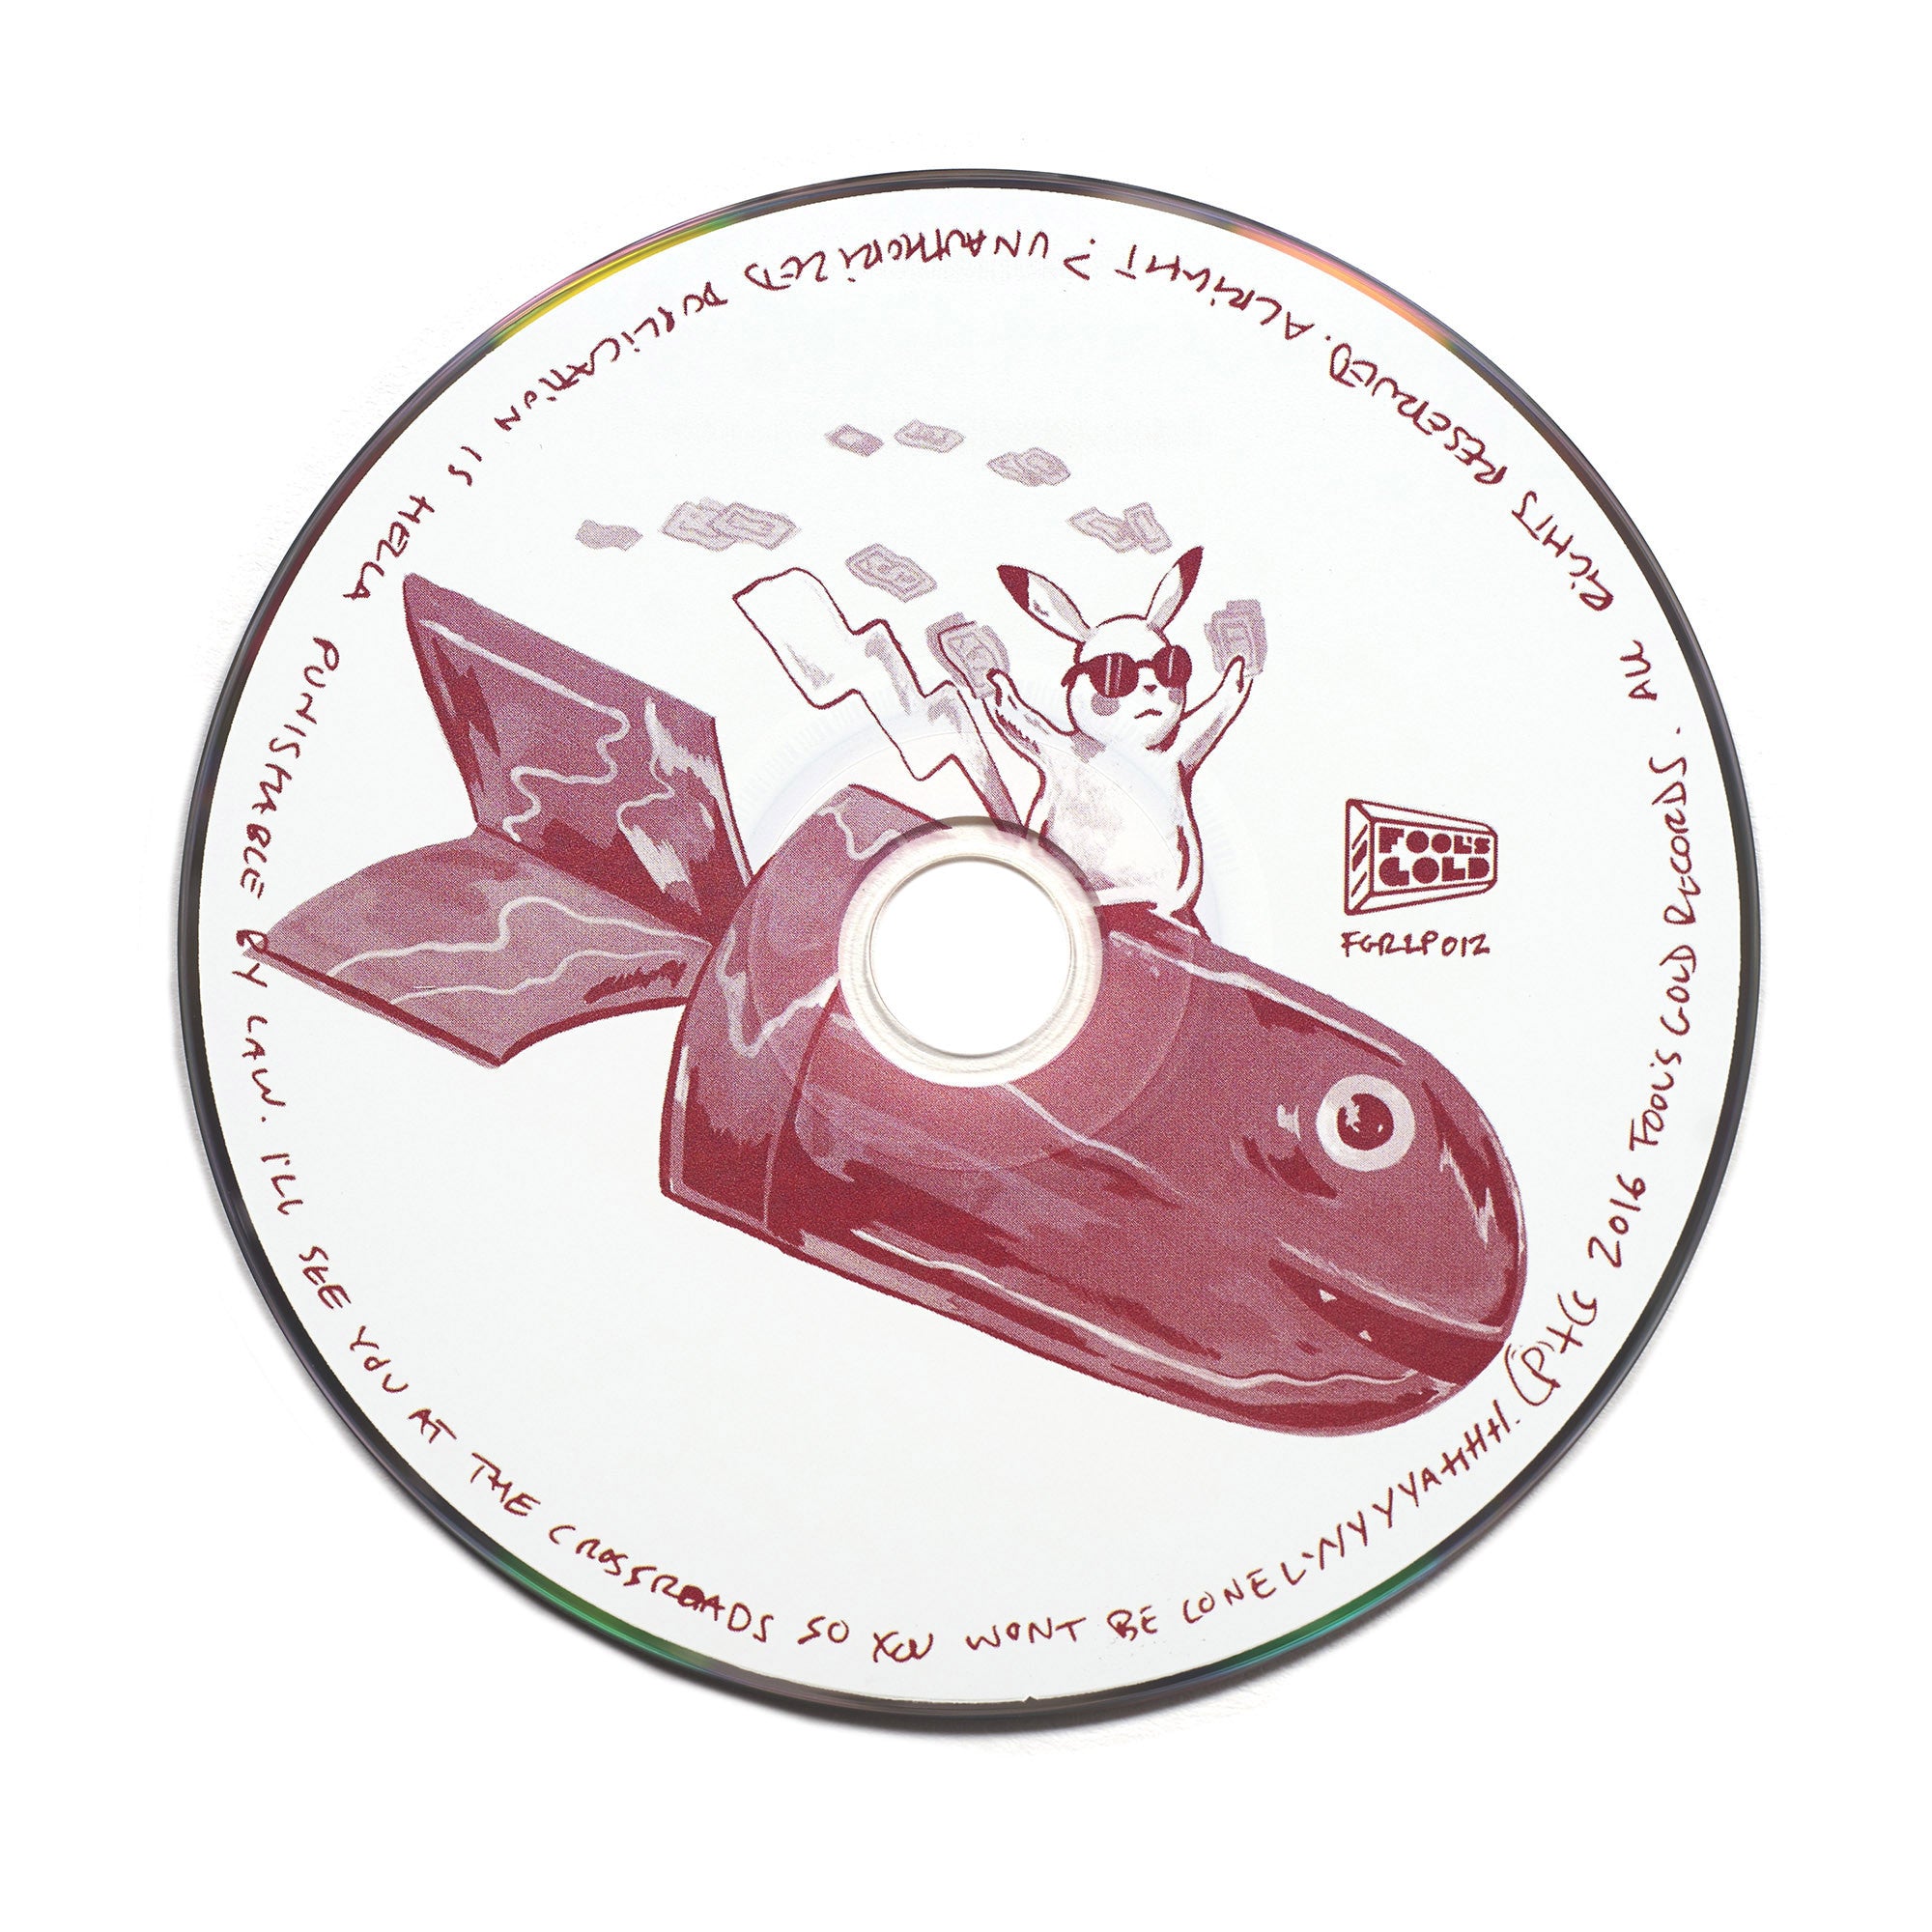 Nick Catchdubs “Smoke Machine” CD